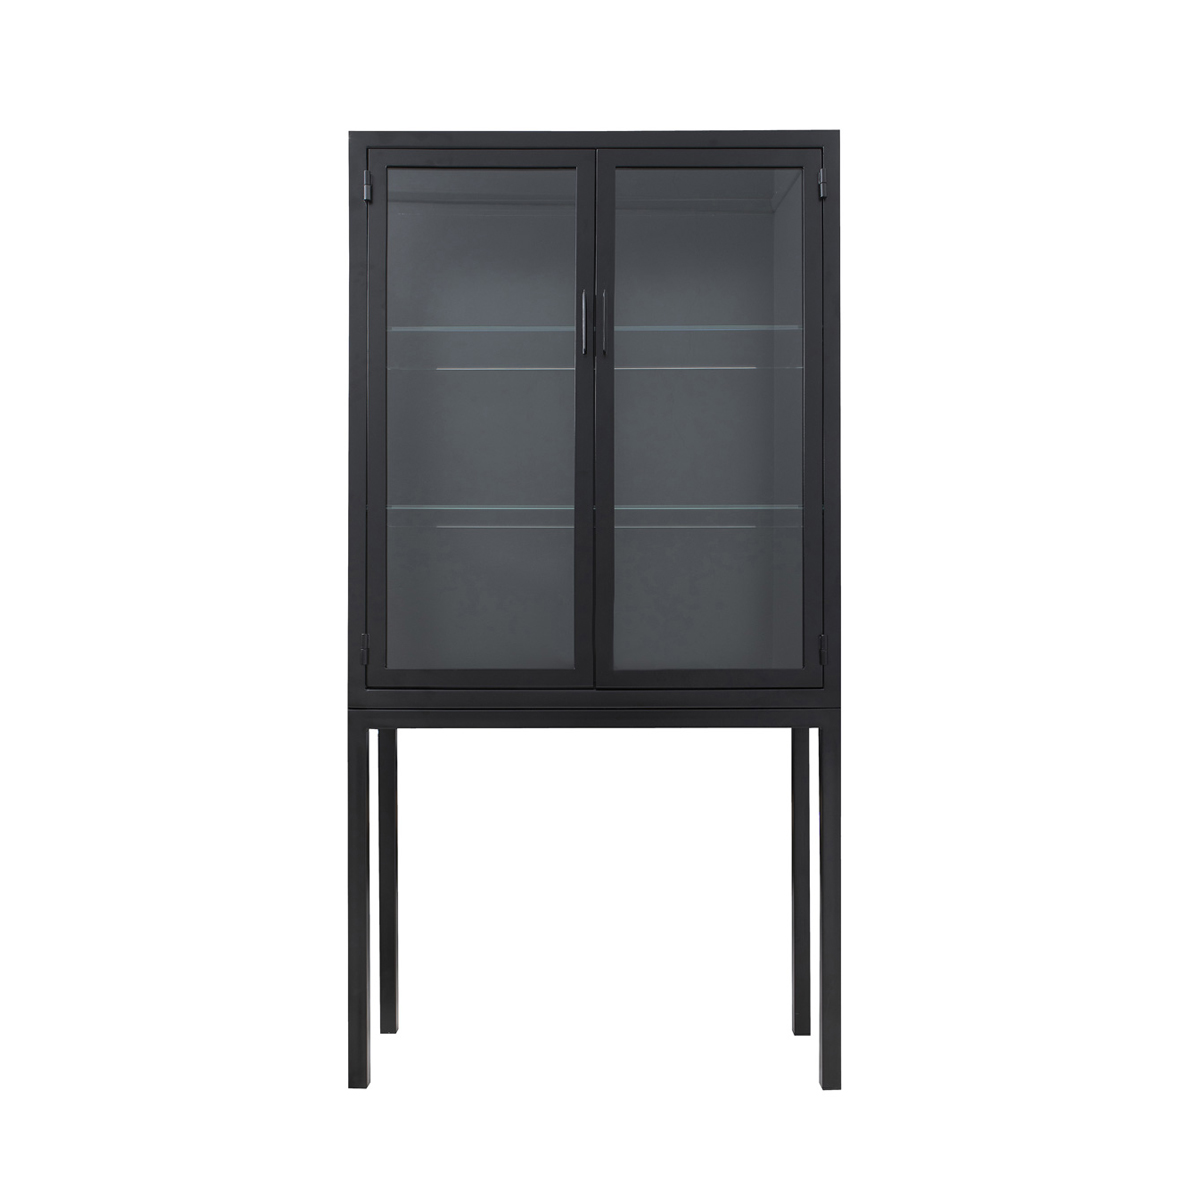 Steel Cabinet With Reeded Glass Doors, Black Metal Cabinet With Glass Doors